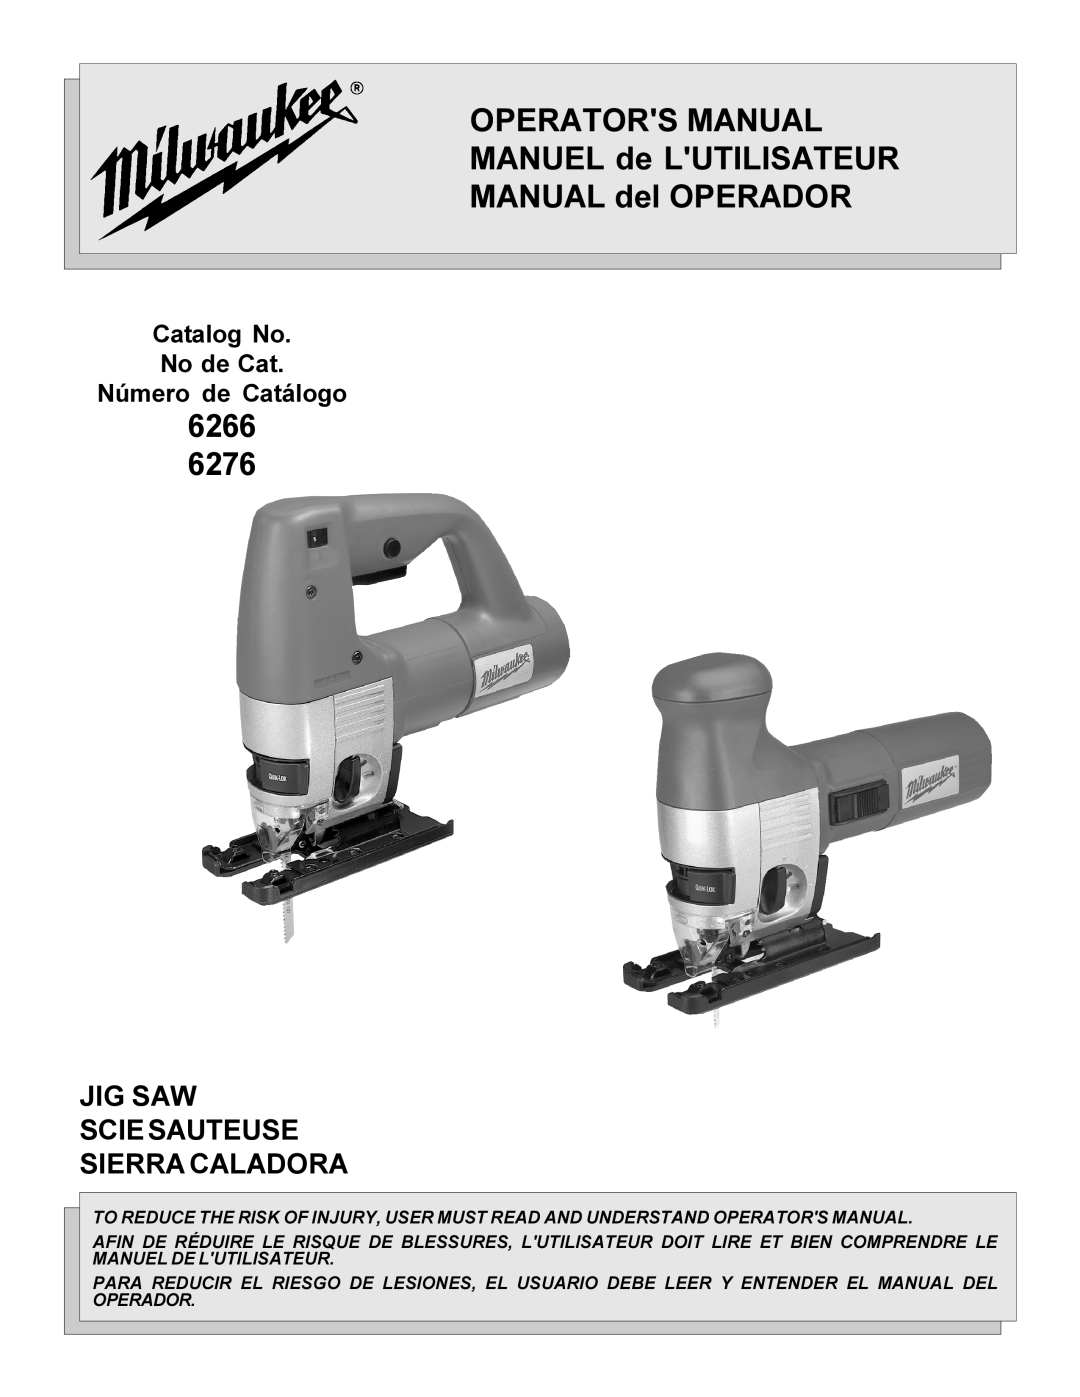 Milwaukee manual OPERATORS MANUAL MANUEL de LUTILISATEUR MANUAL del OPERADOR, 6266 6276 